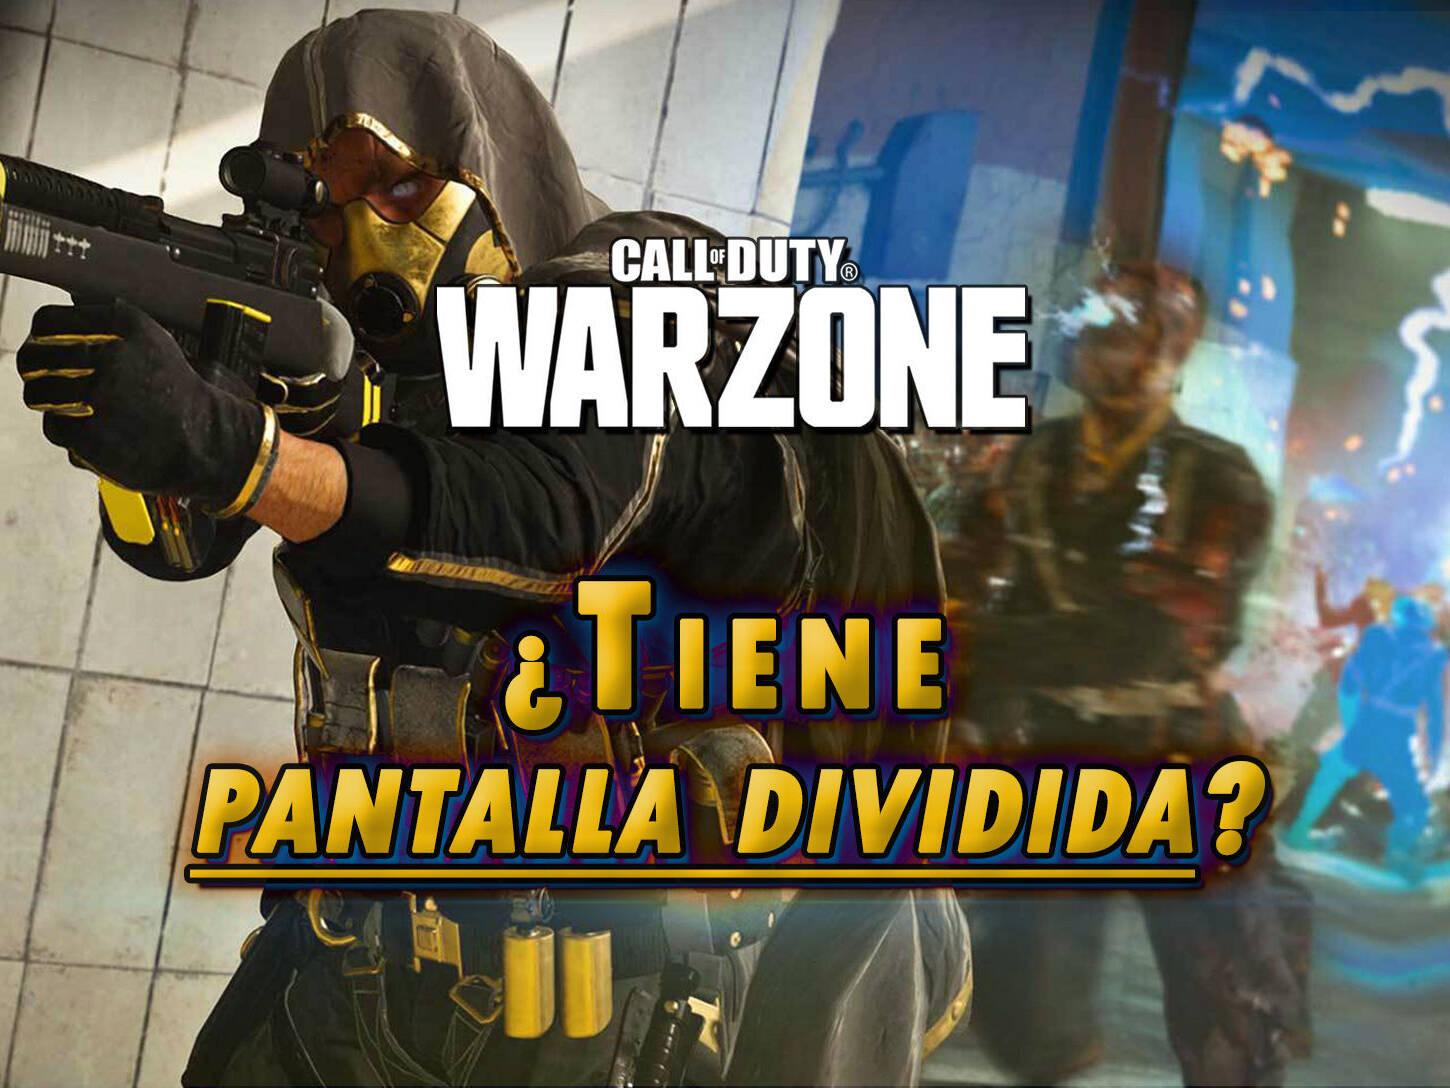 Call Duty Warzone: puede jugar pantalla dividida?